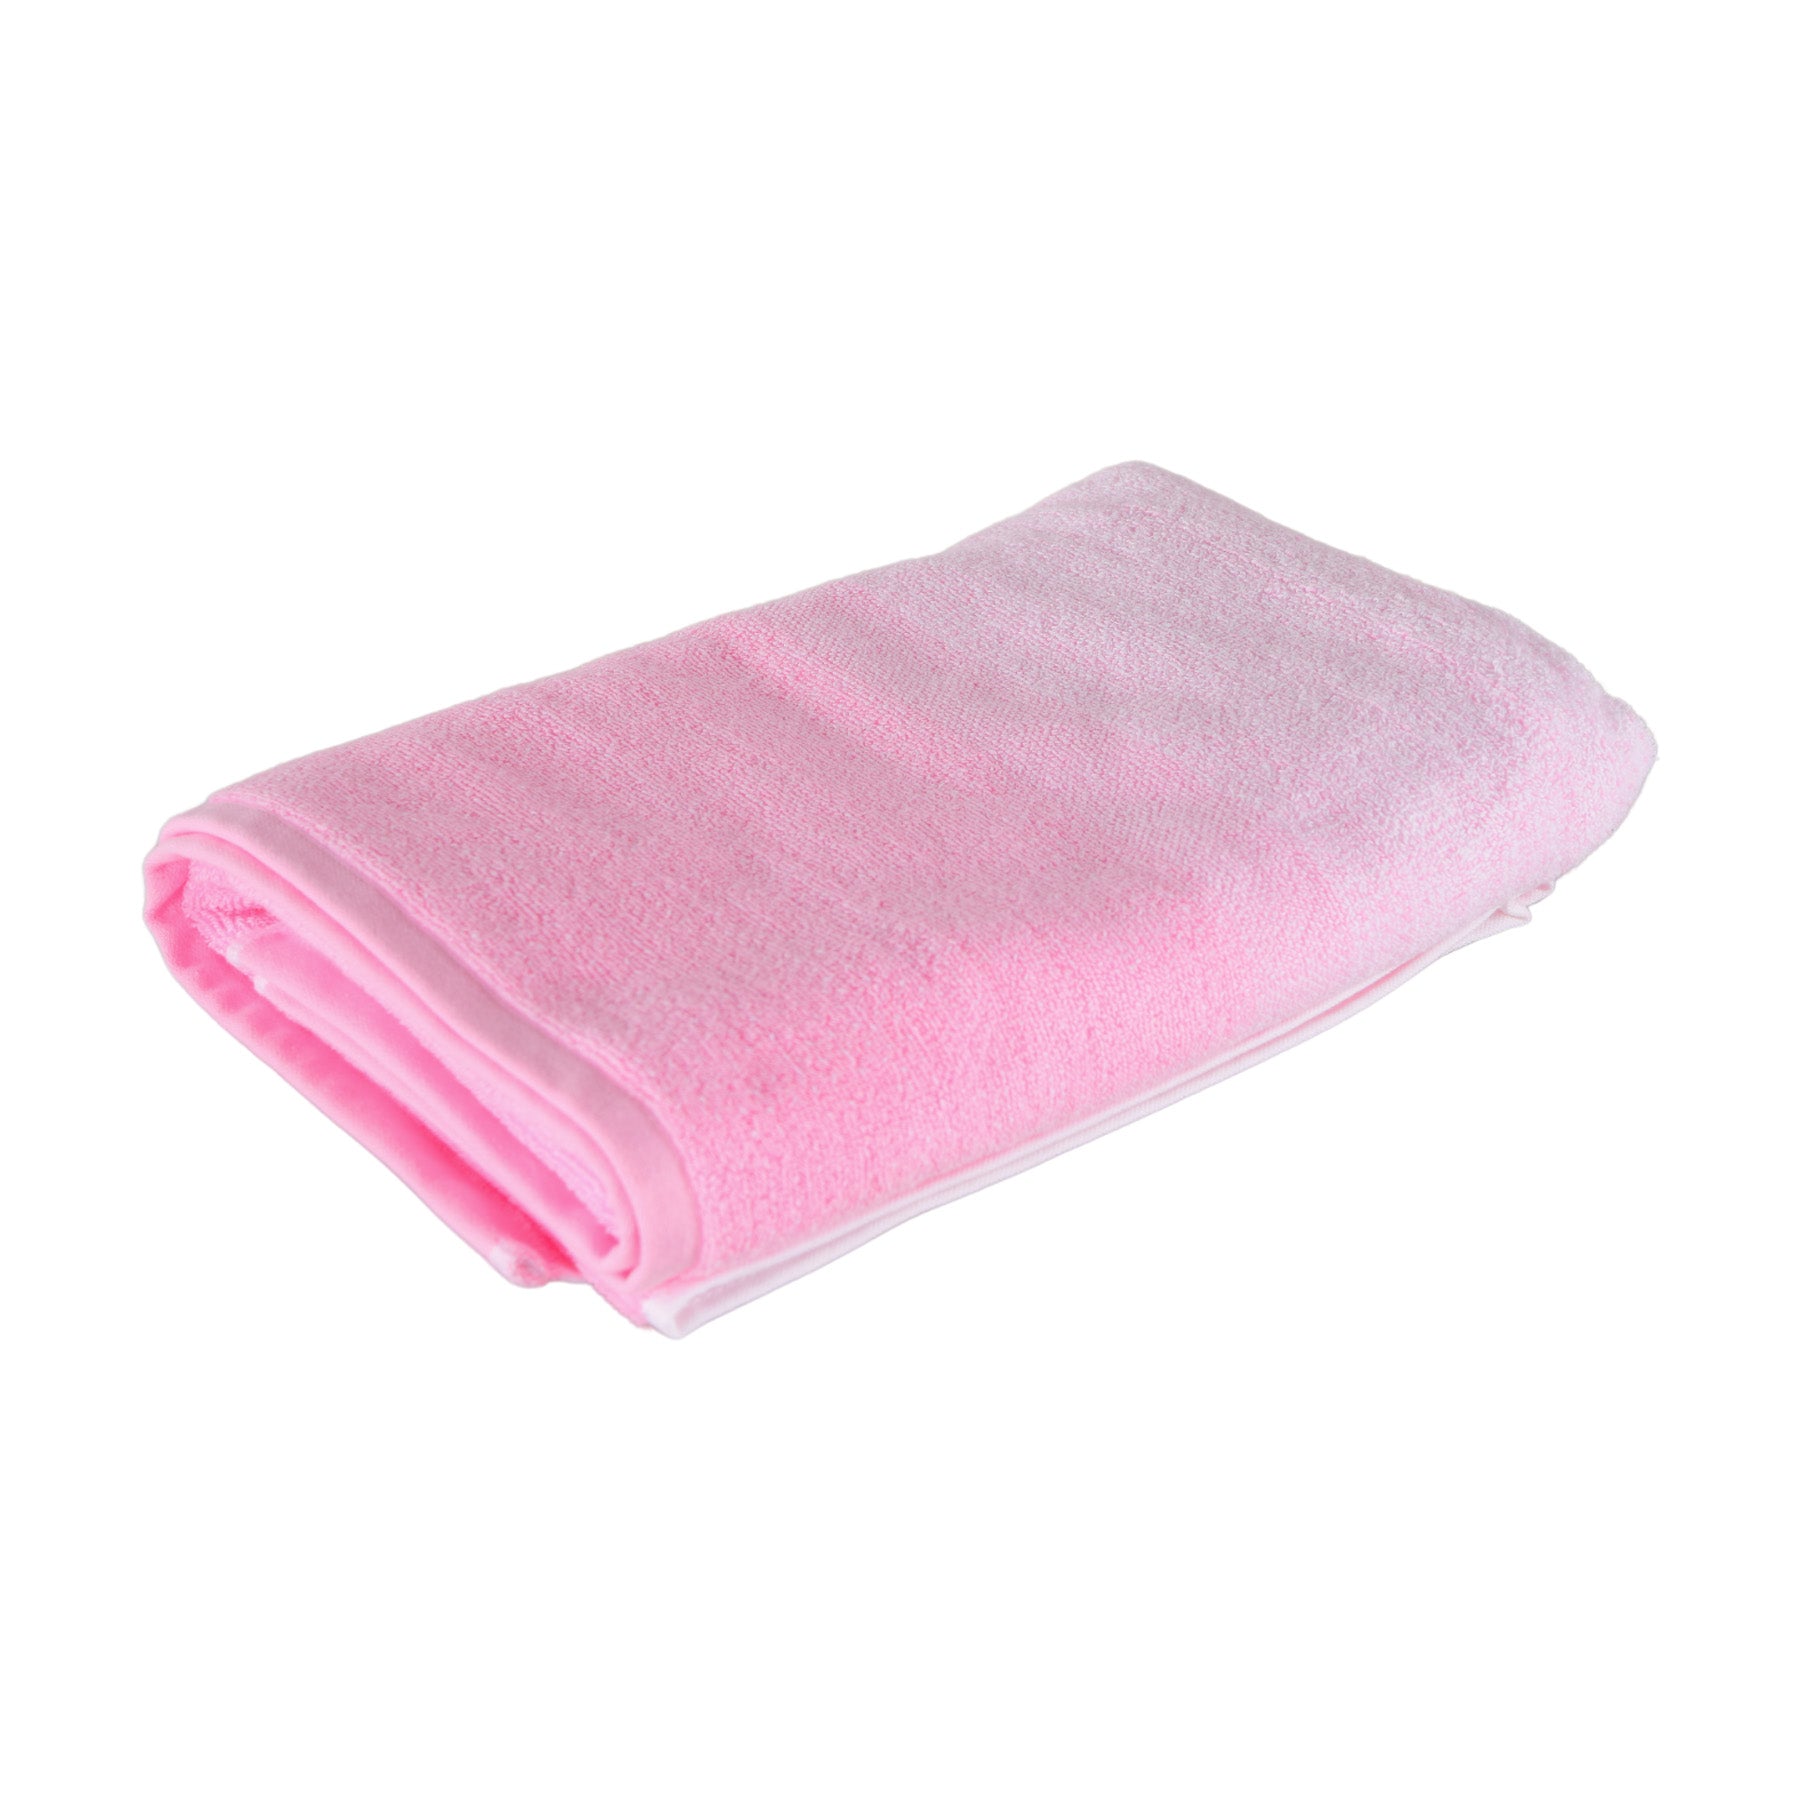 Stripe line towel 70x140 cm